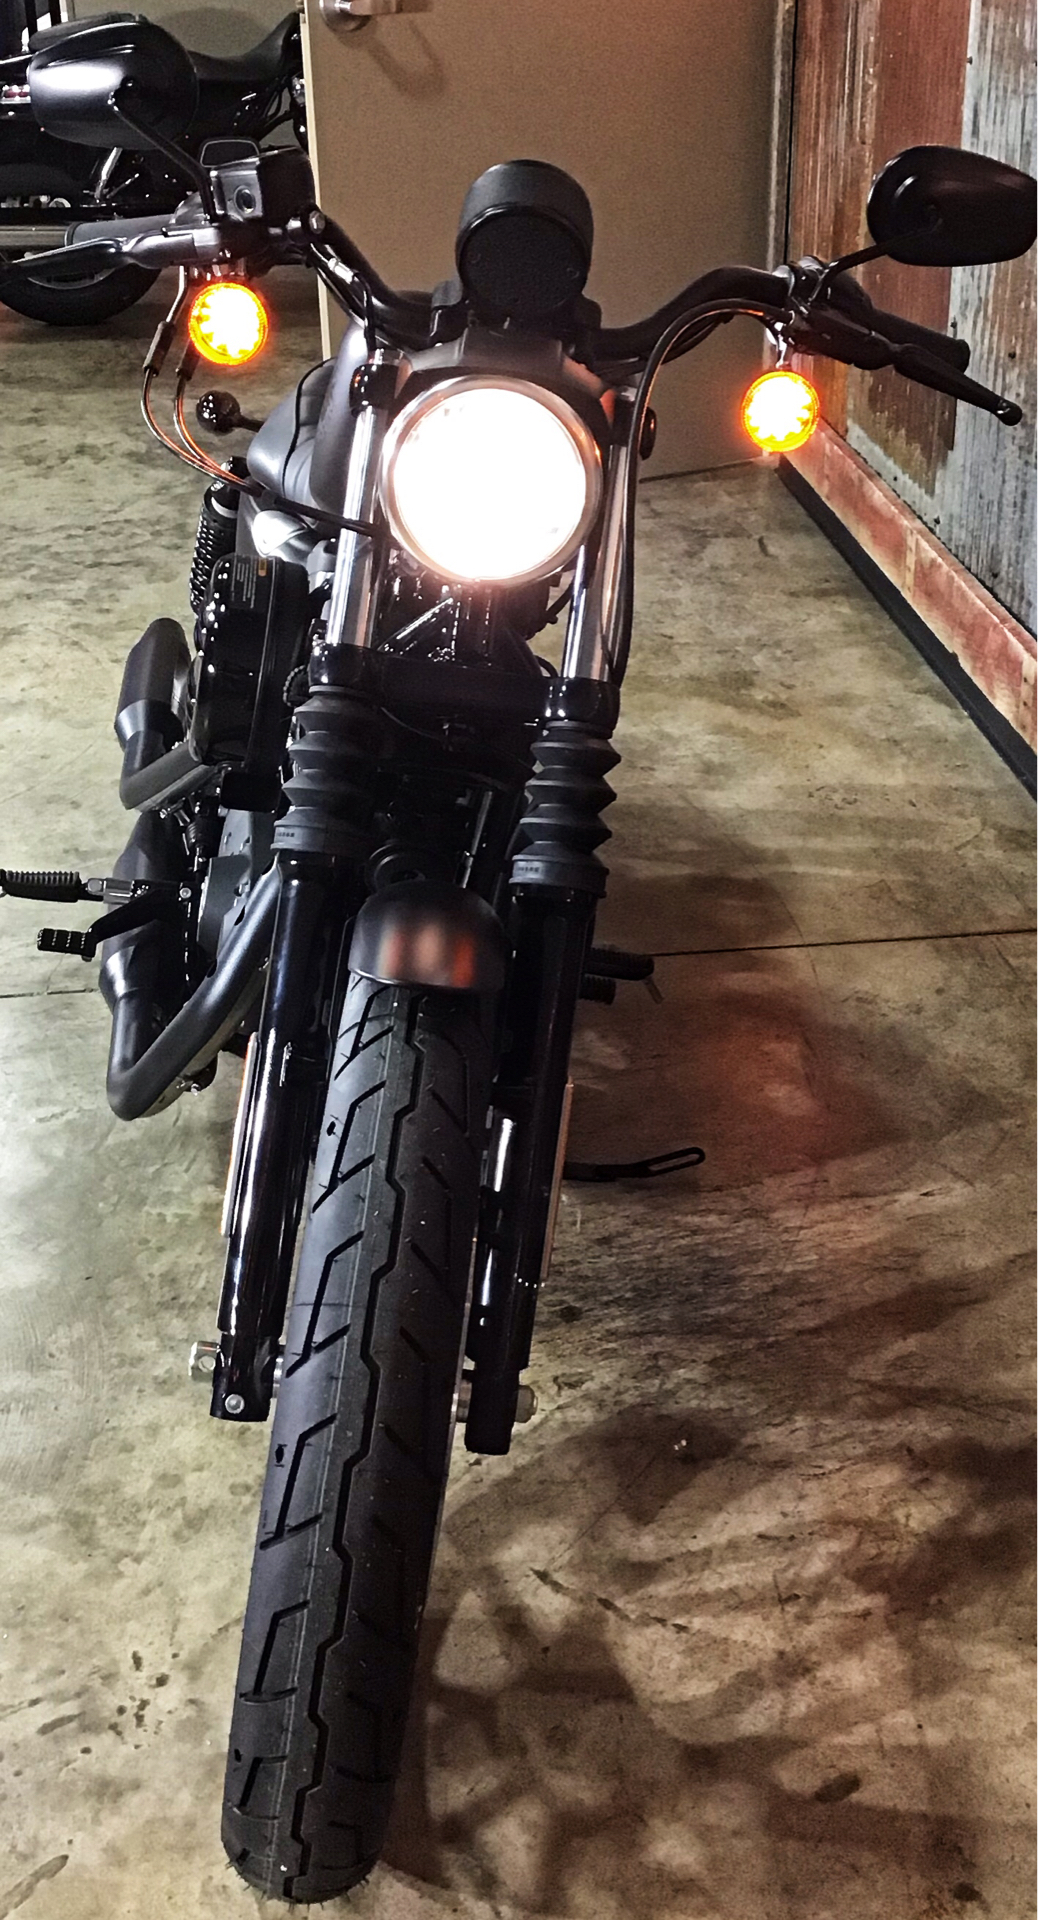 2022 Harley-Davidson Iron 883™ in Chippewa Falls, Wisconsin - Photo 7